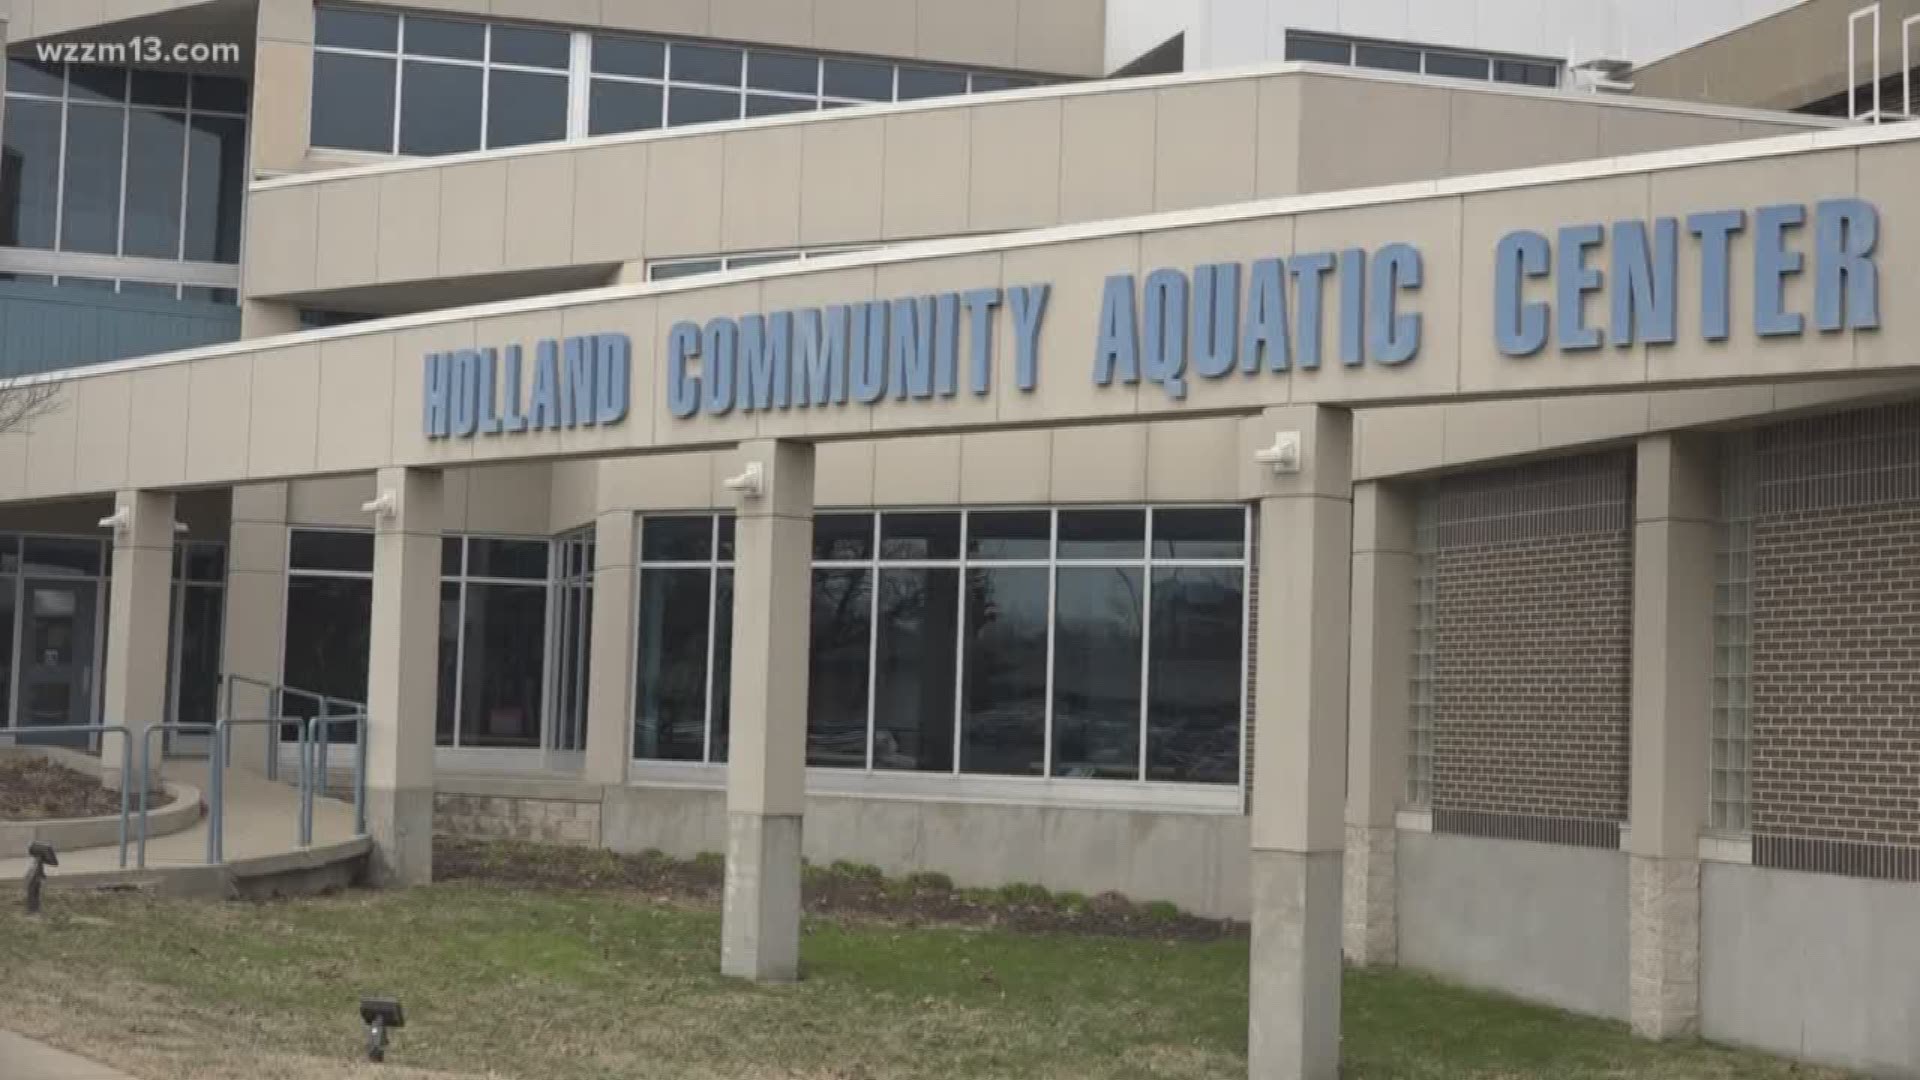 Holland Aquatic Center plans expansion